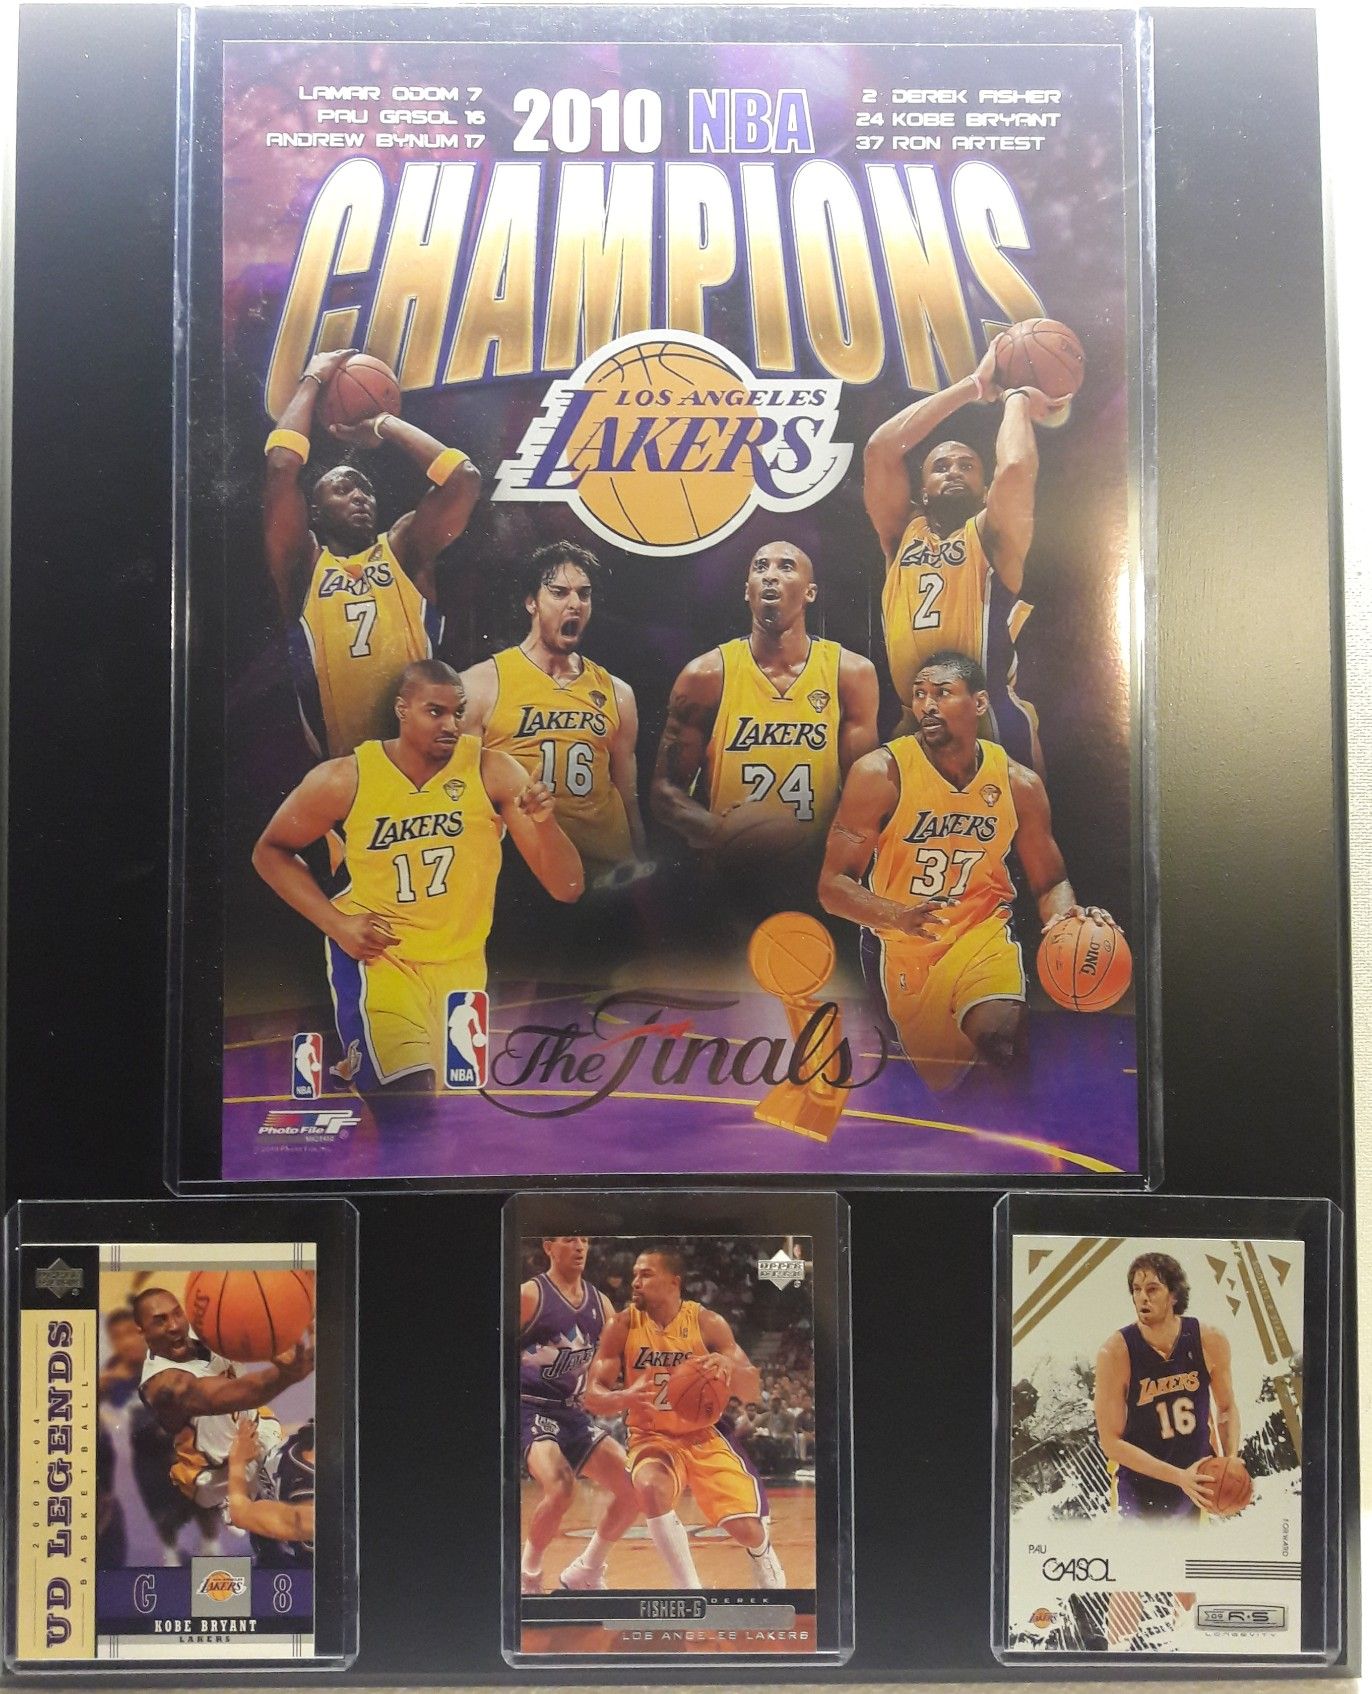 Lakers 2010 championship plaque